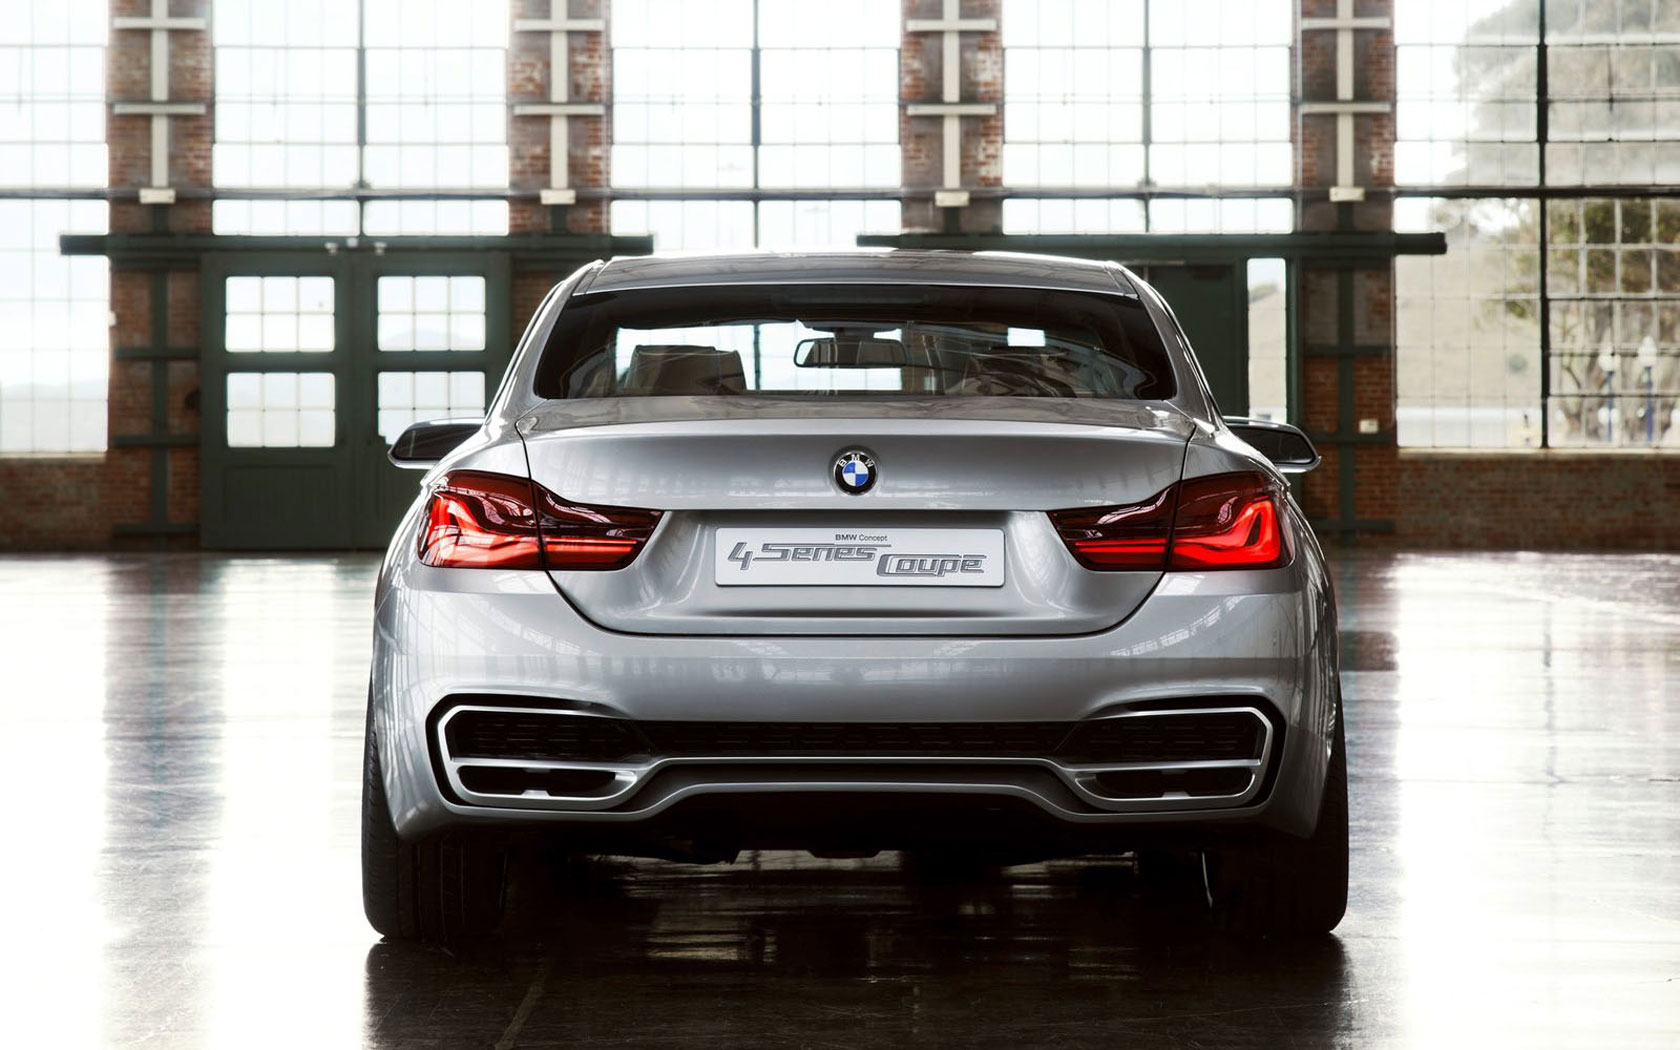  BMW 4-series Concept 